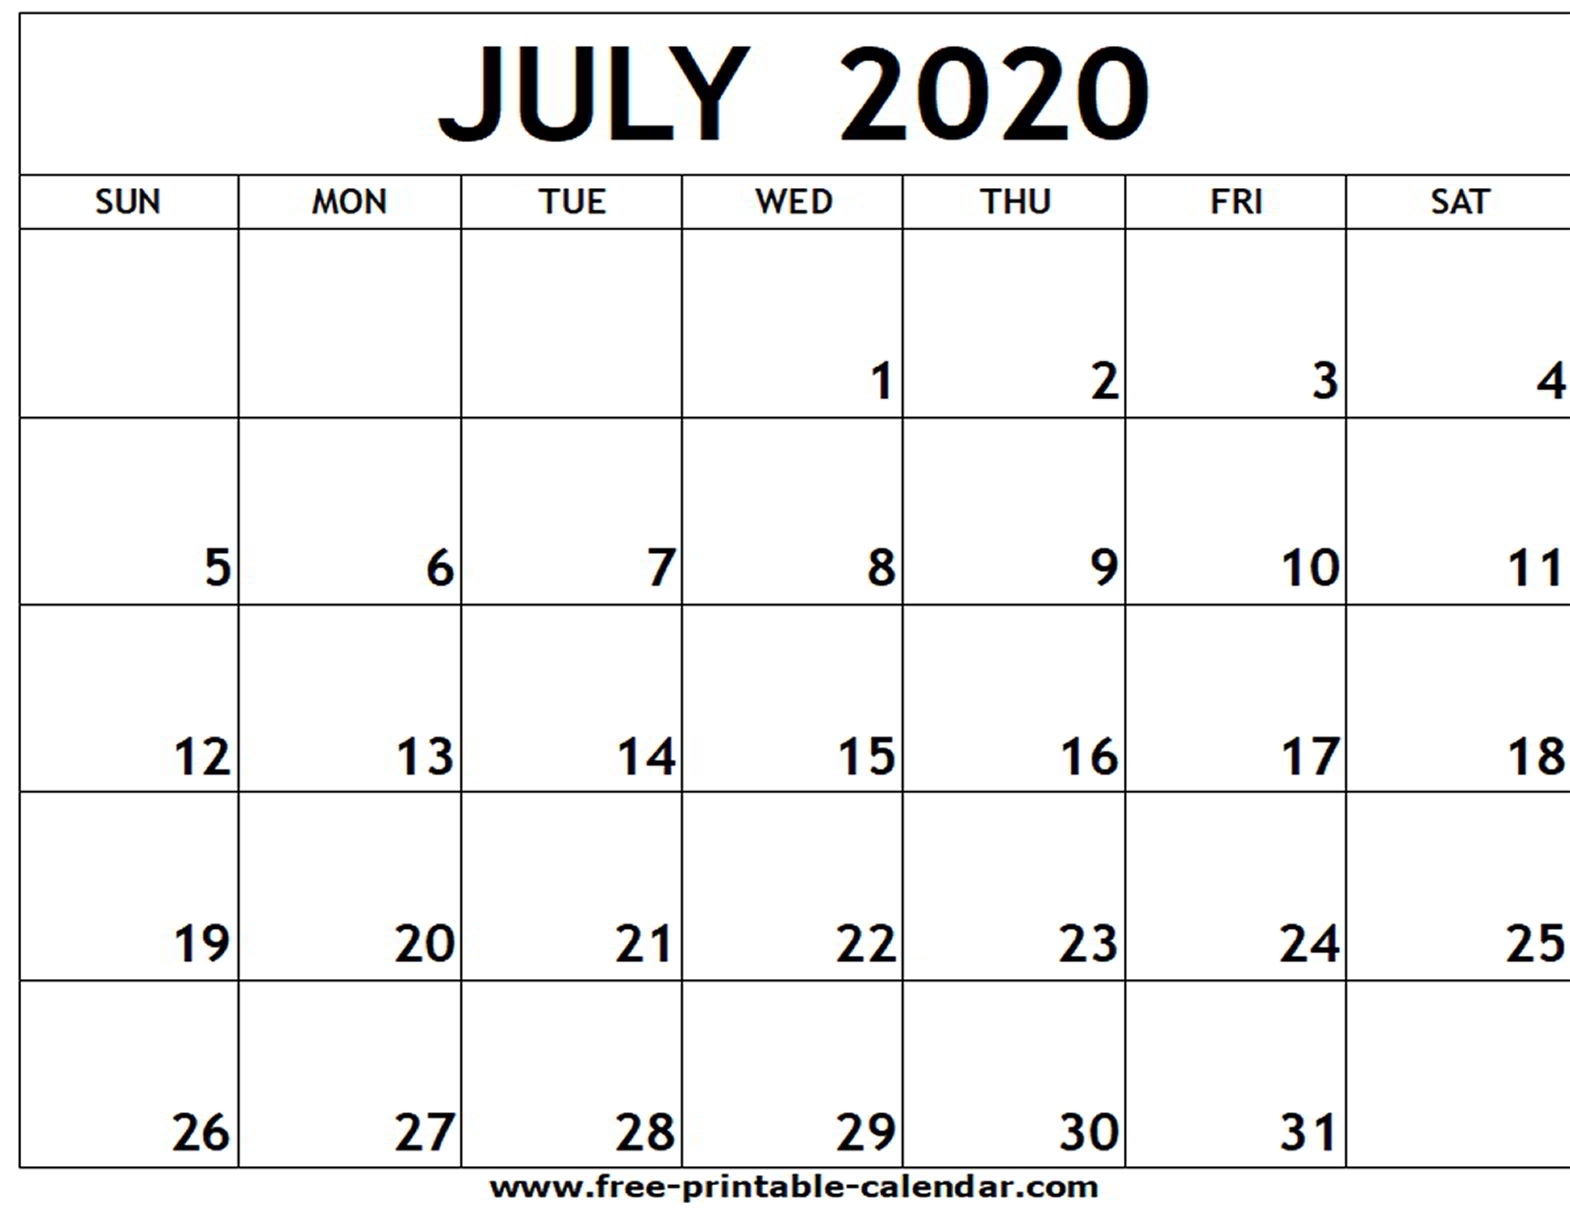 July 2020 Printable Calendar - Free-Printable-Calendar